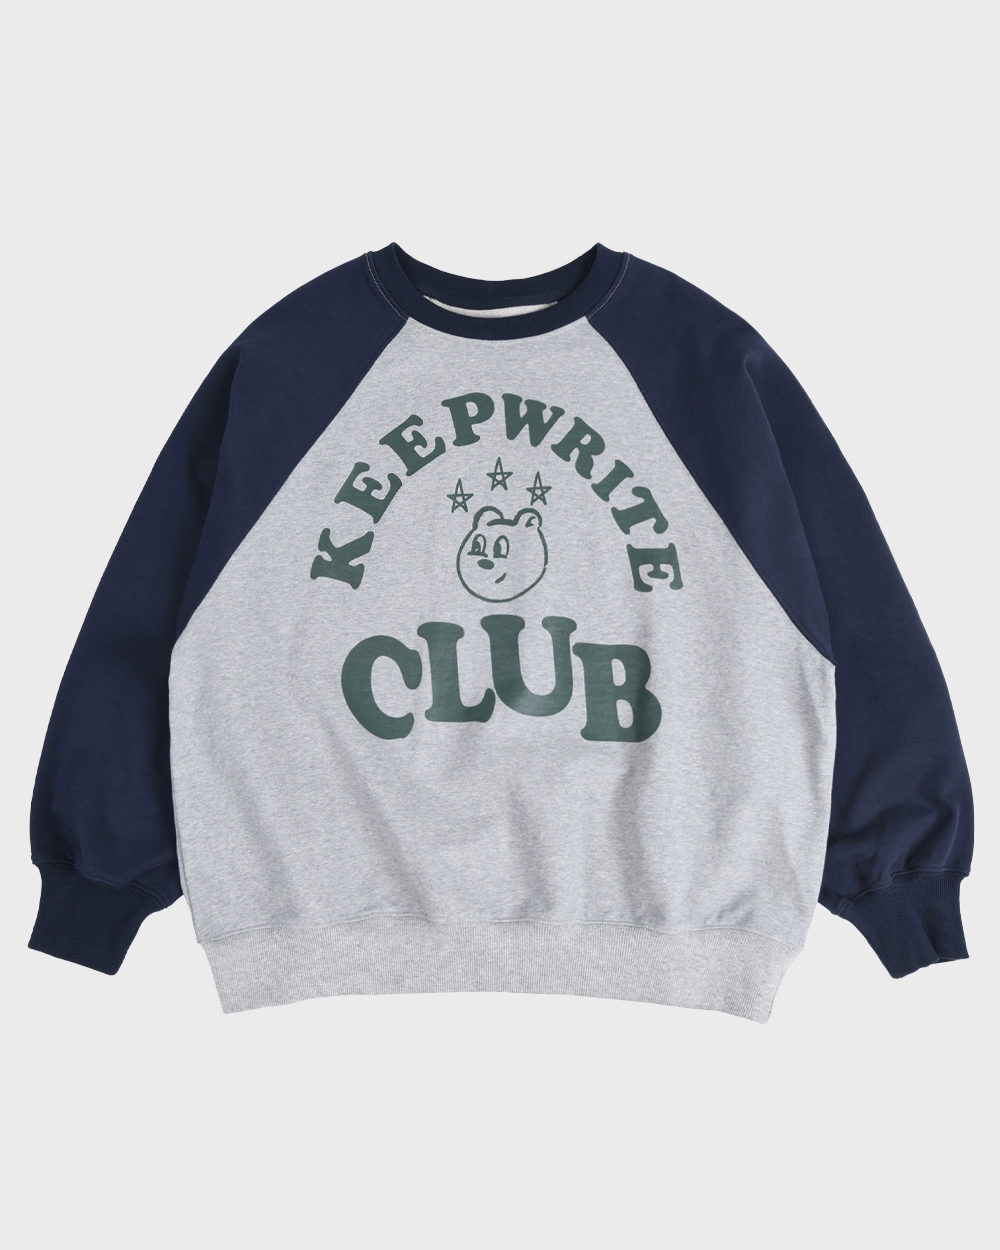 aeae Keep Writing Club Raglan Sweatshirts (Navy)